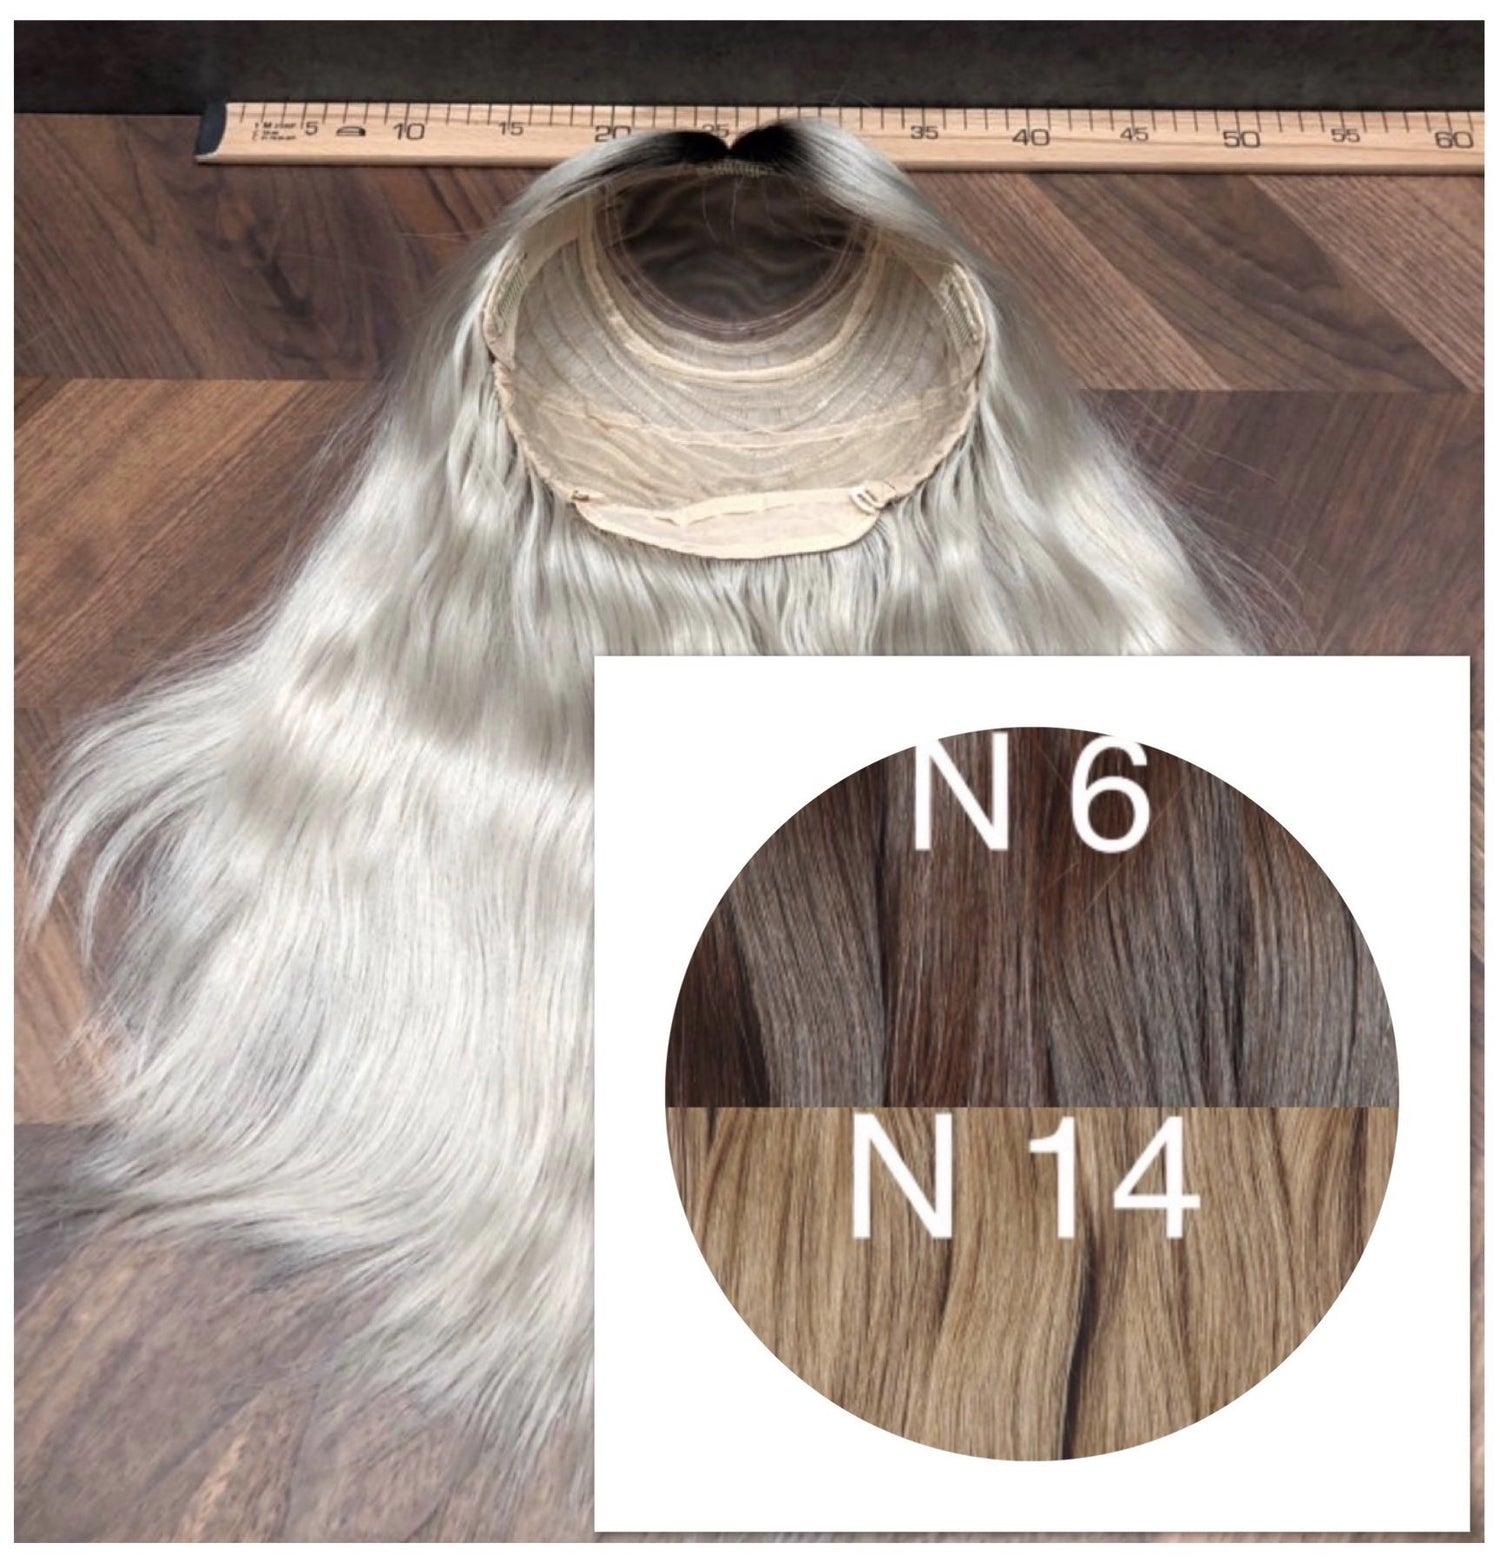 Wigs Ombre 6 and 14 Color GVA hair_Retail price - GVA hair